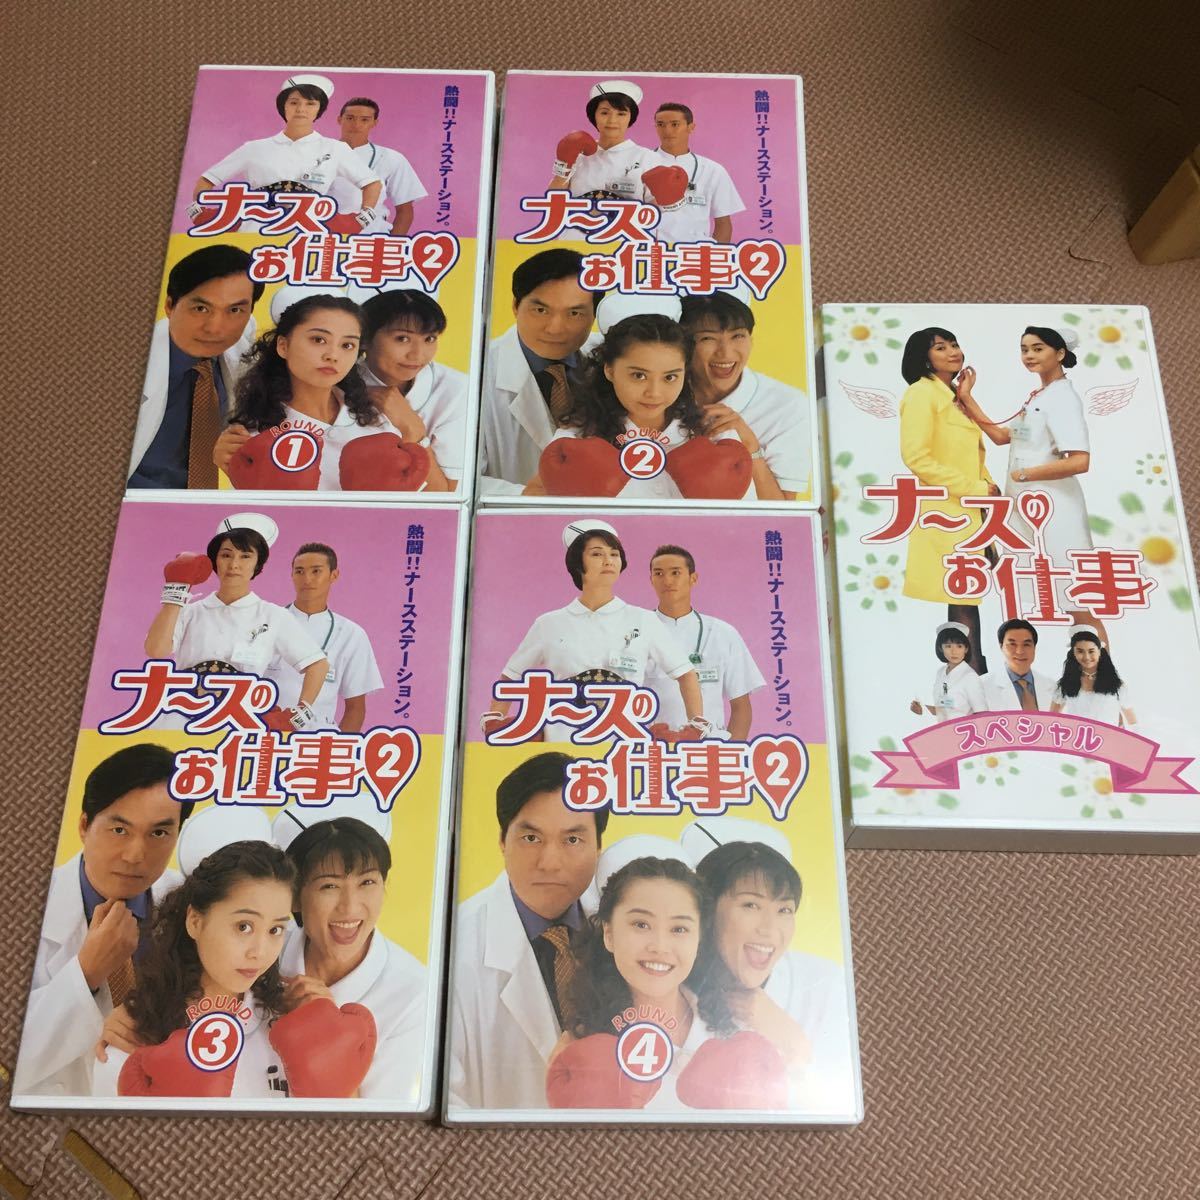 GINGER掲載商品】 ナースのお仕事3(1) VHS DVD - daisenkaku.or.jp